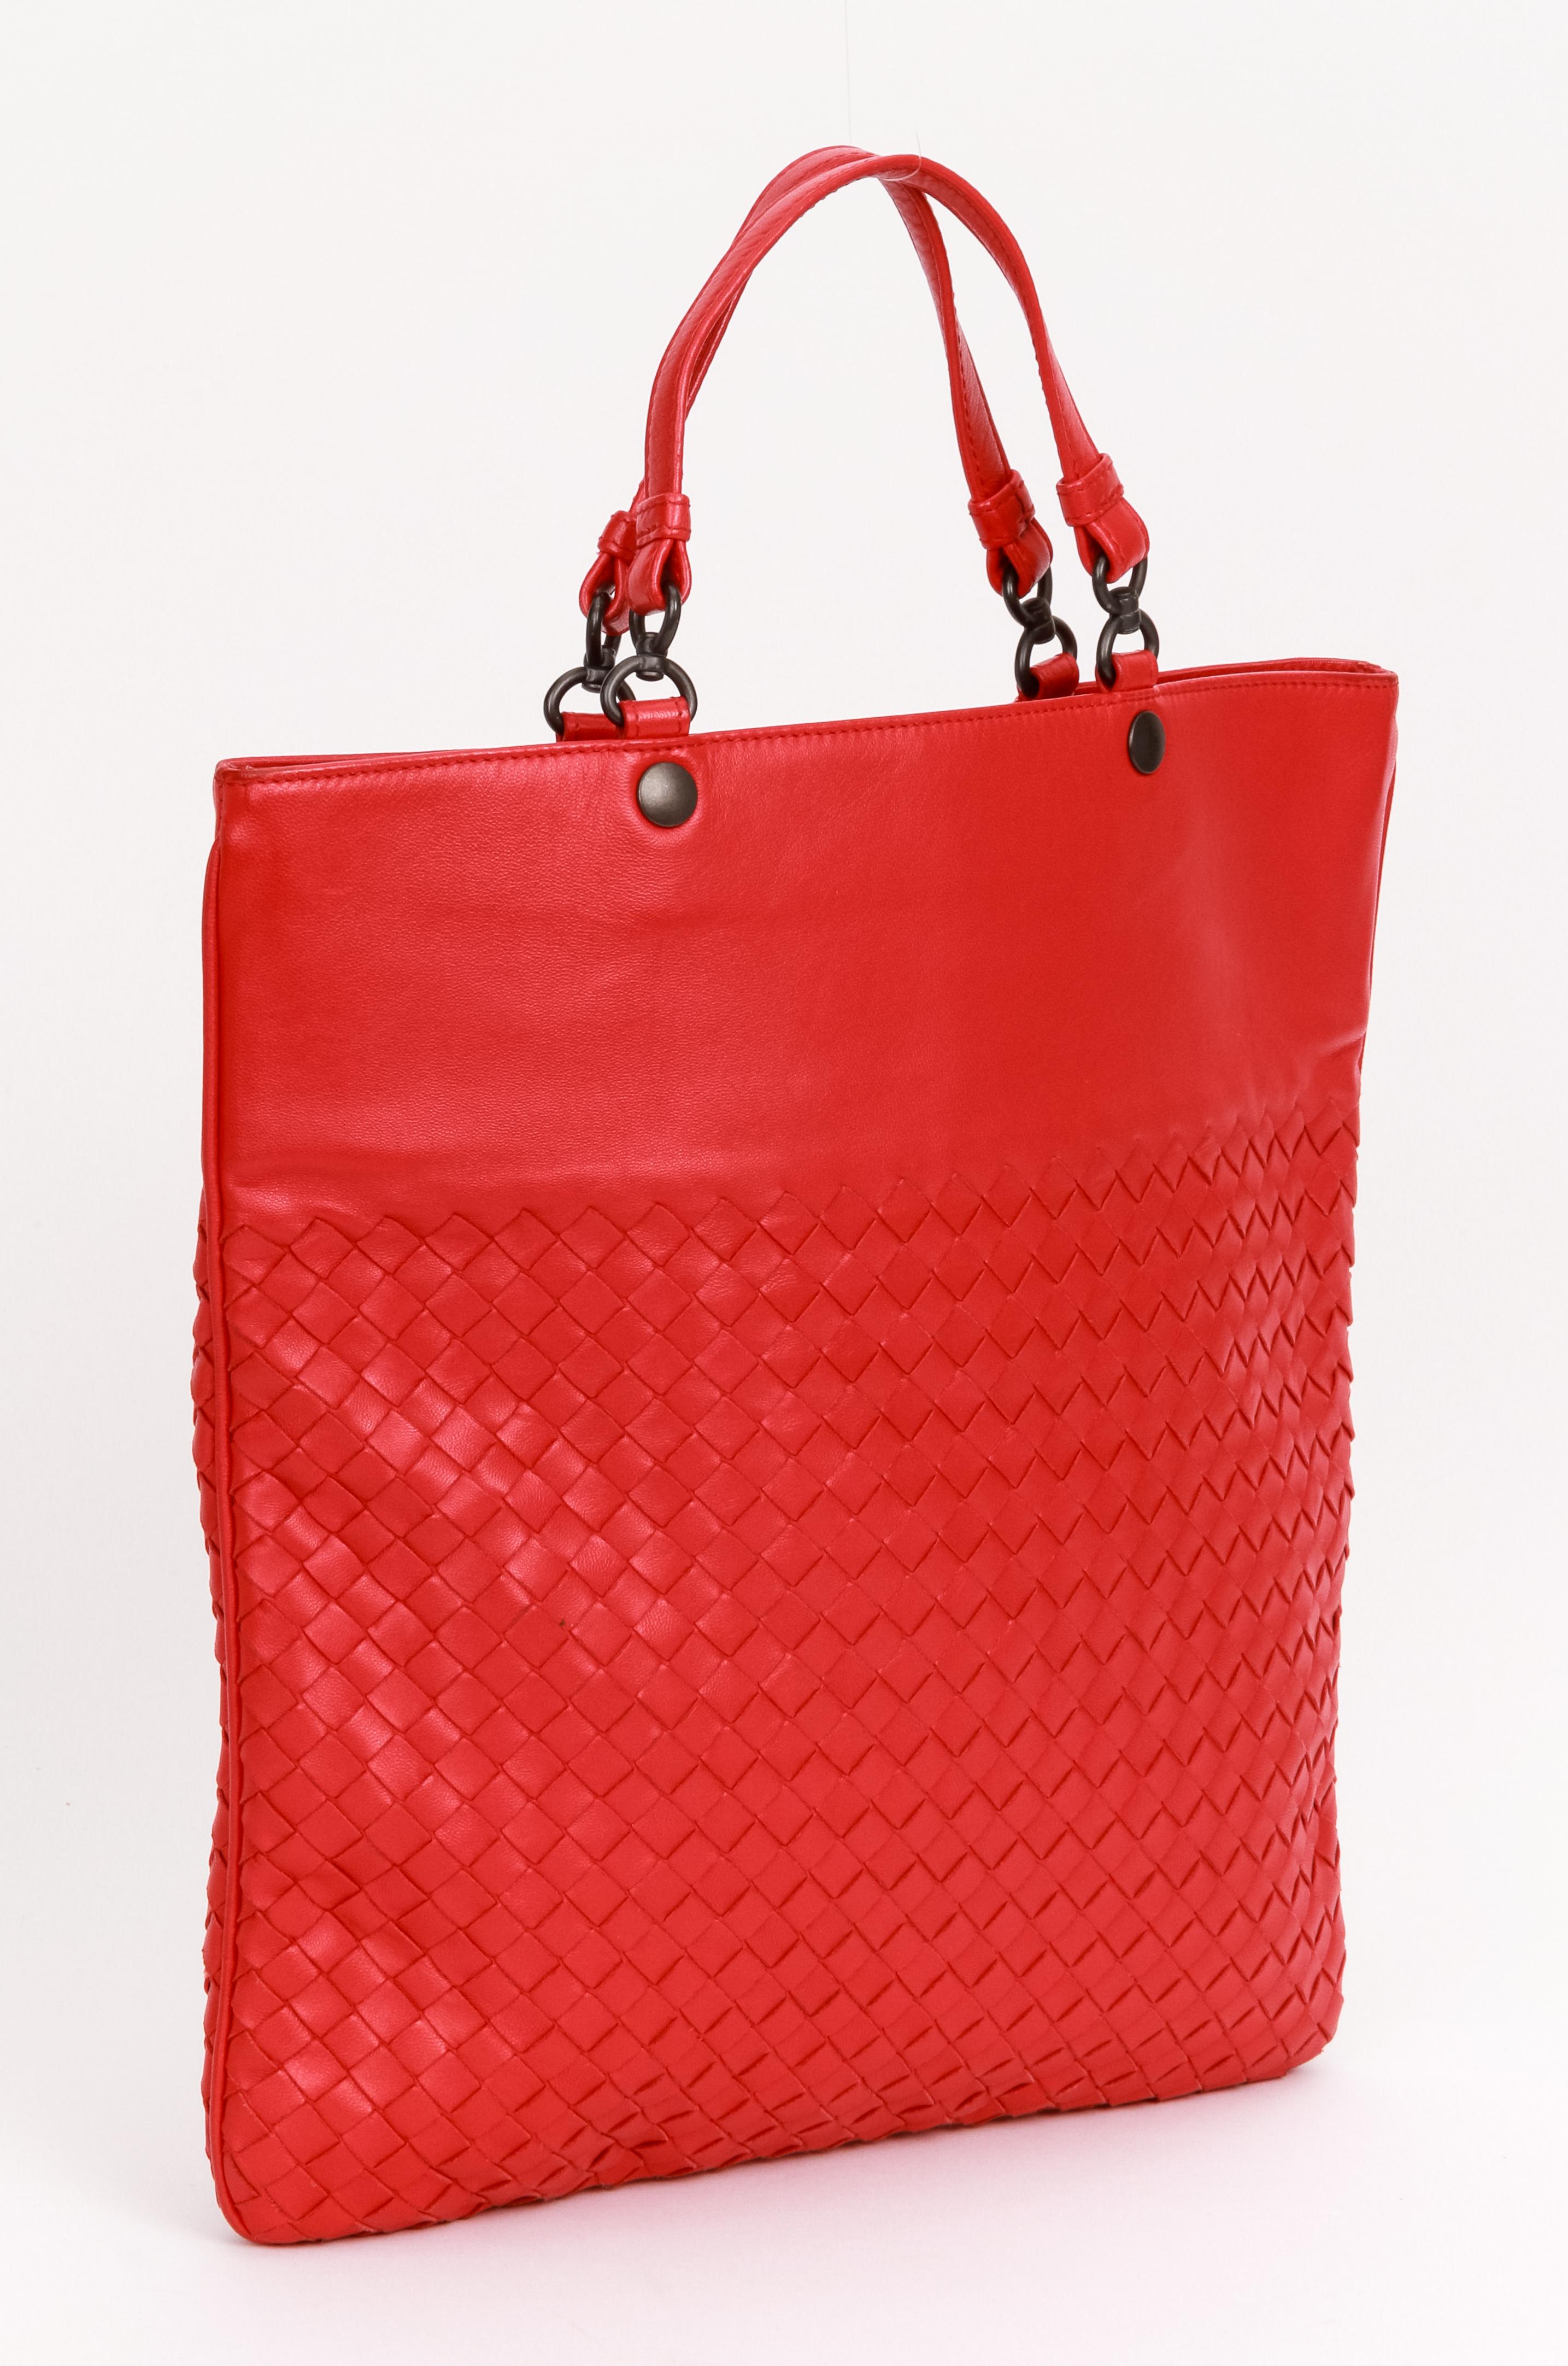 Bottega Veneta intrecciato red lambskin leather bag , dark metal hardware. Minor wear on corners , snap closure. Comes with original dust cover.